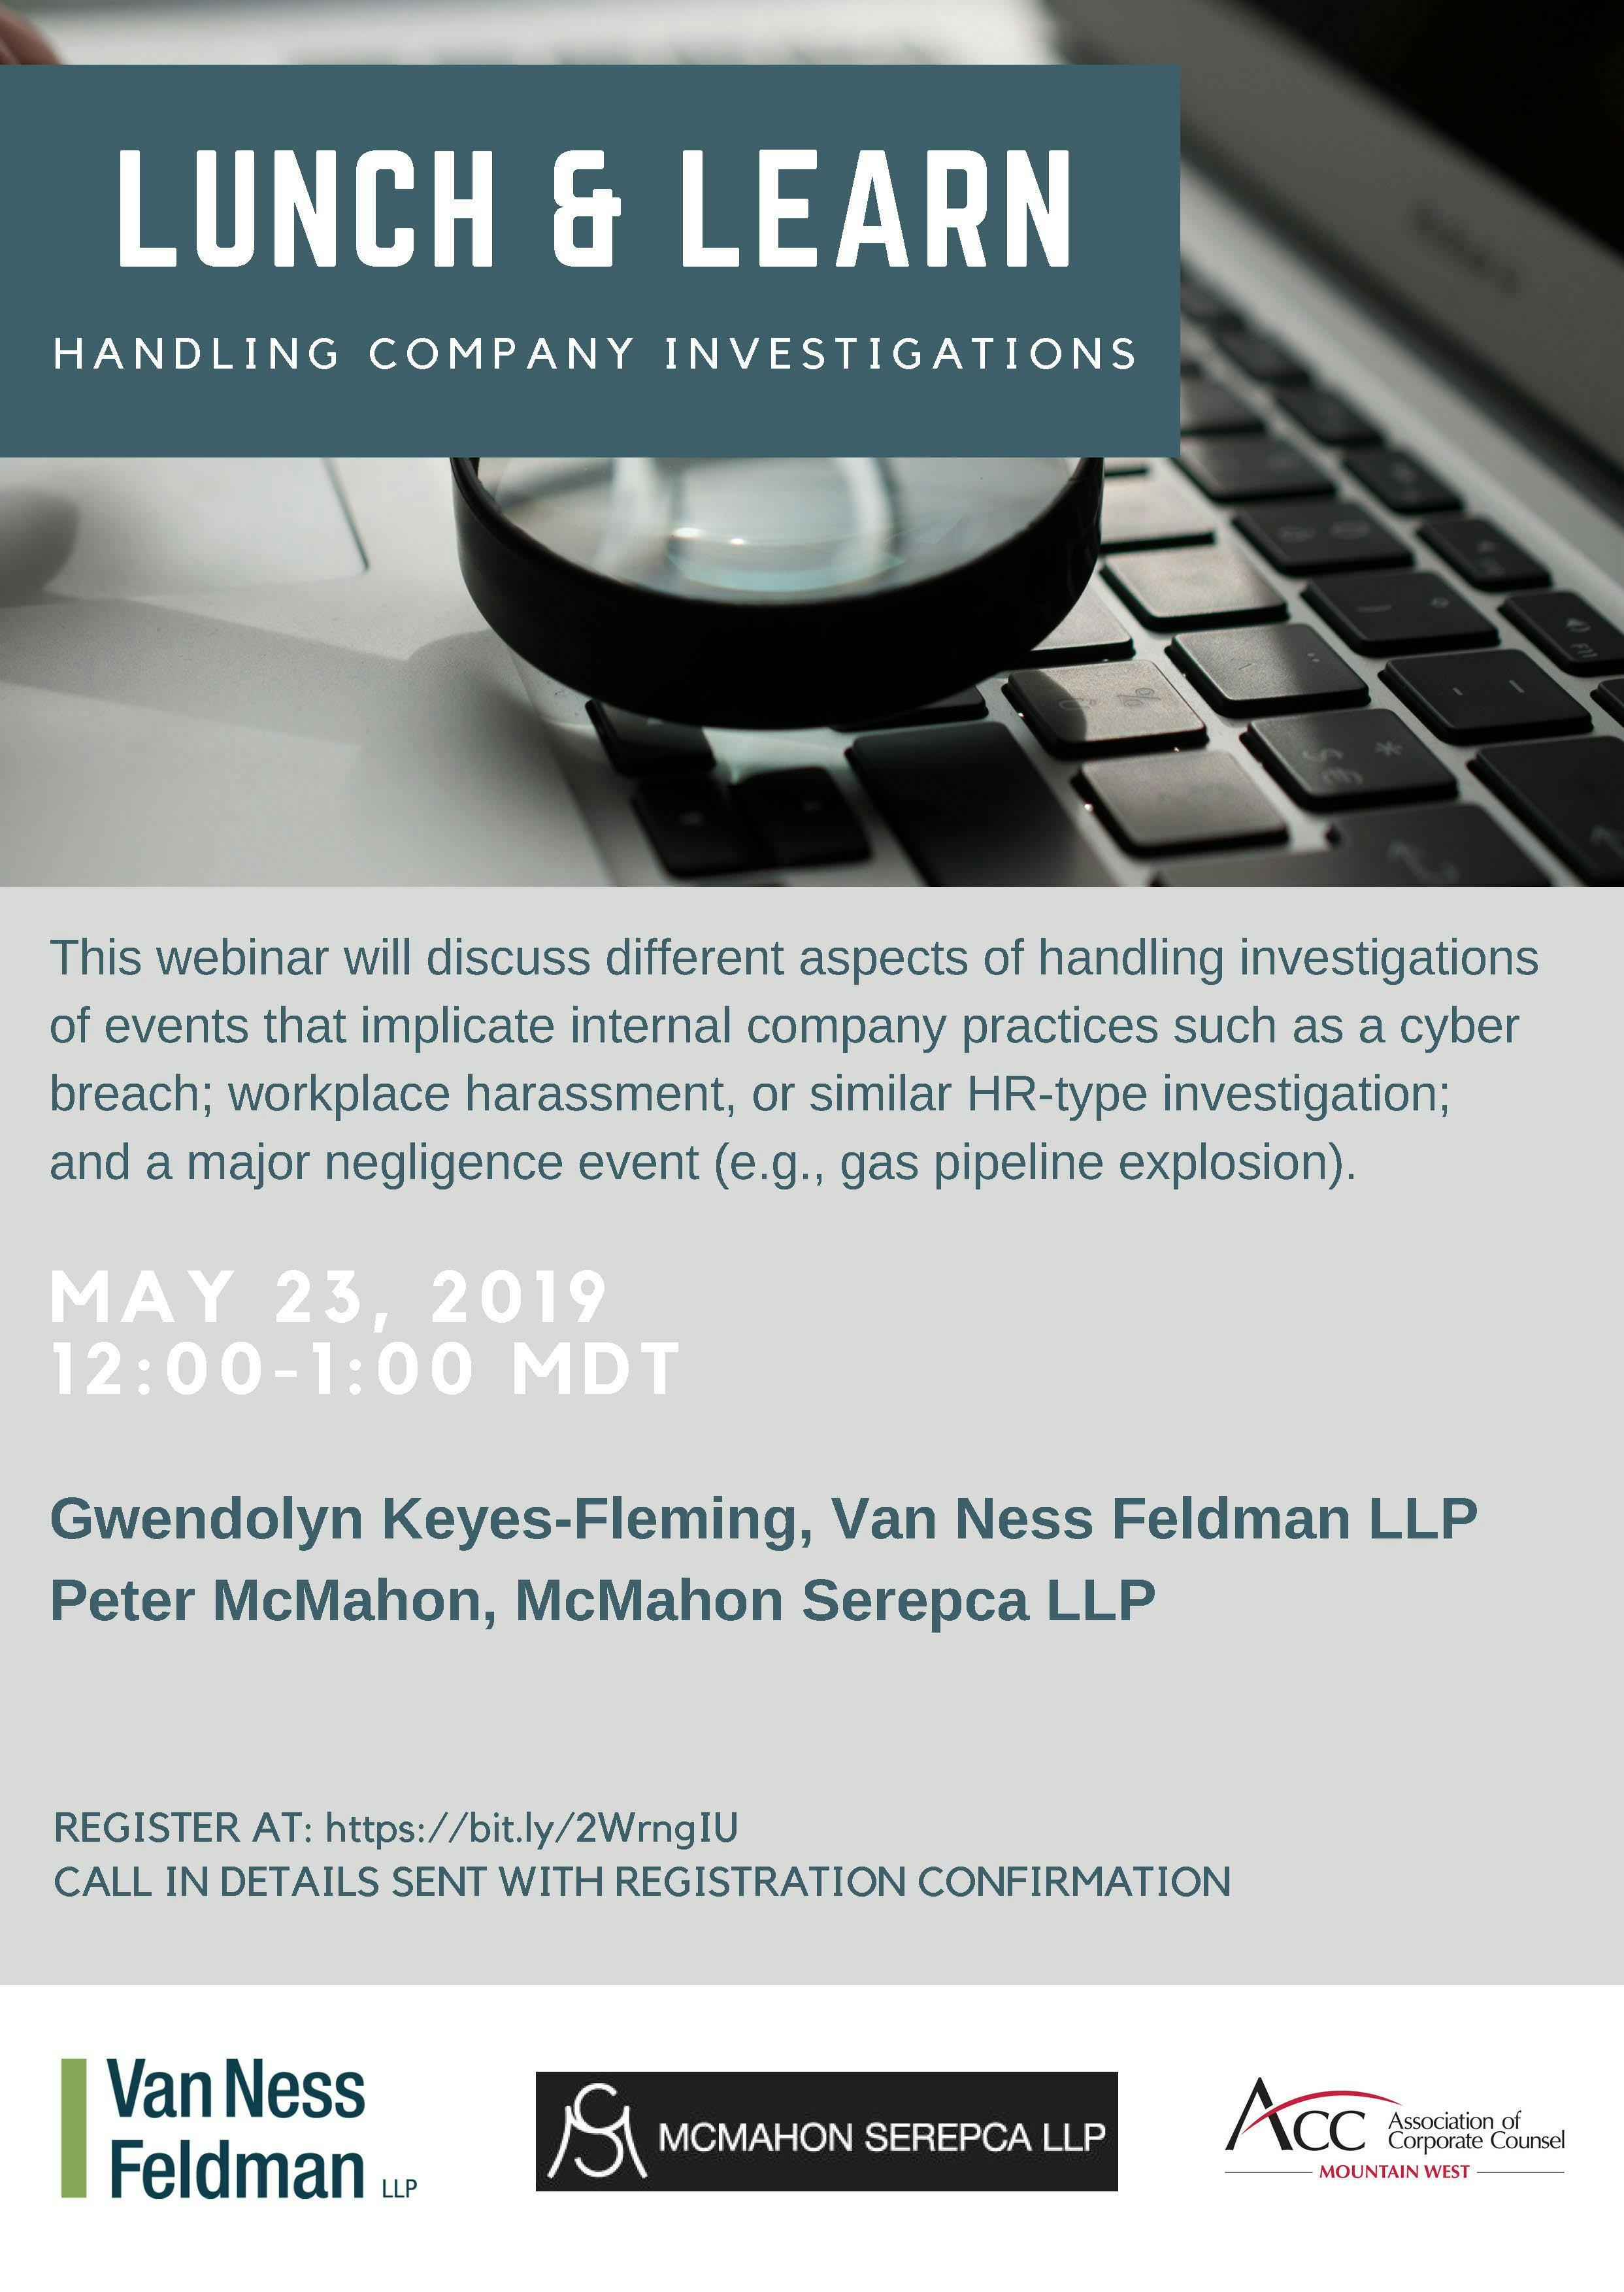 ACC Webinar by Van Ness Feldman: Handling Company Investigations